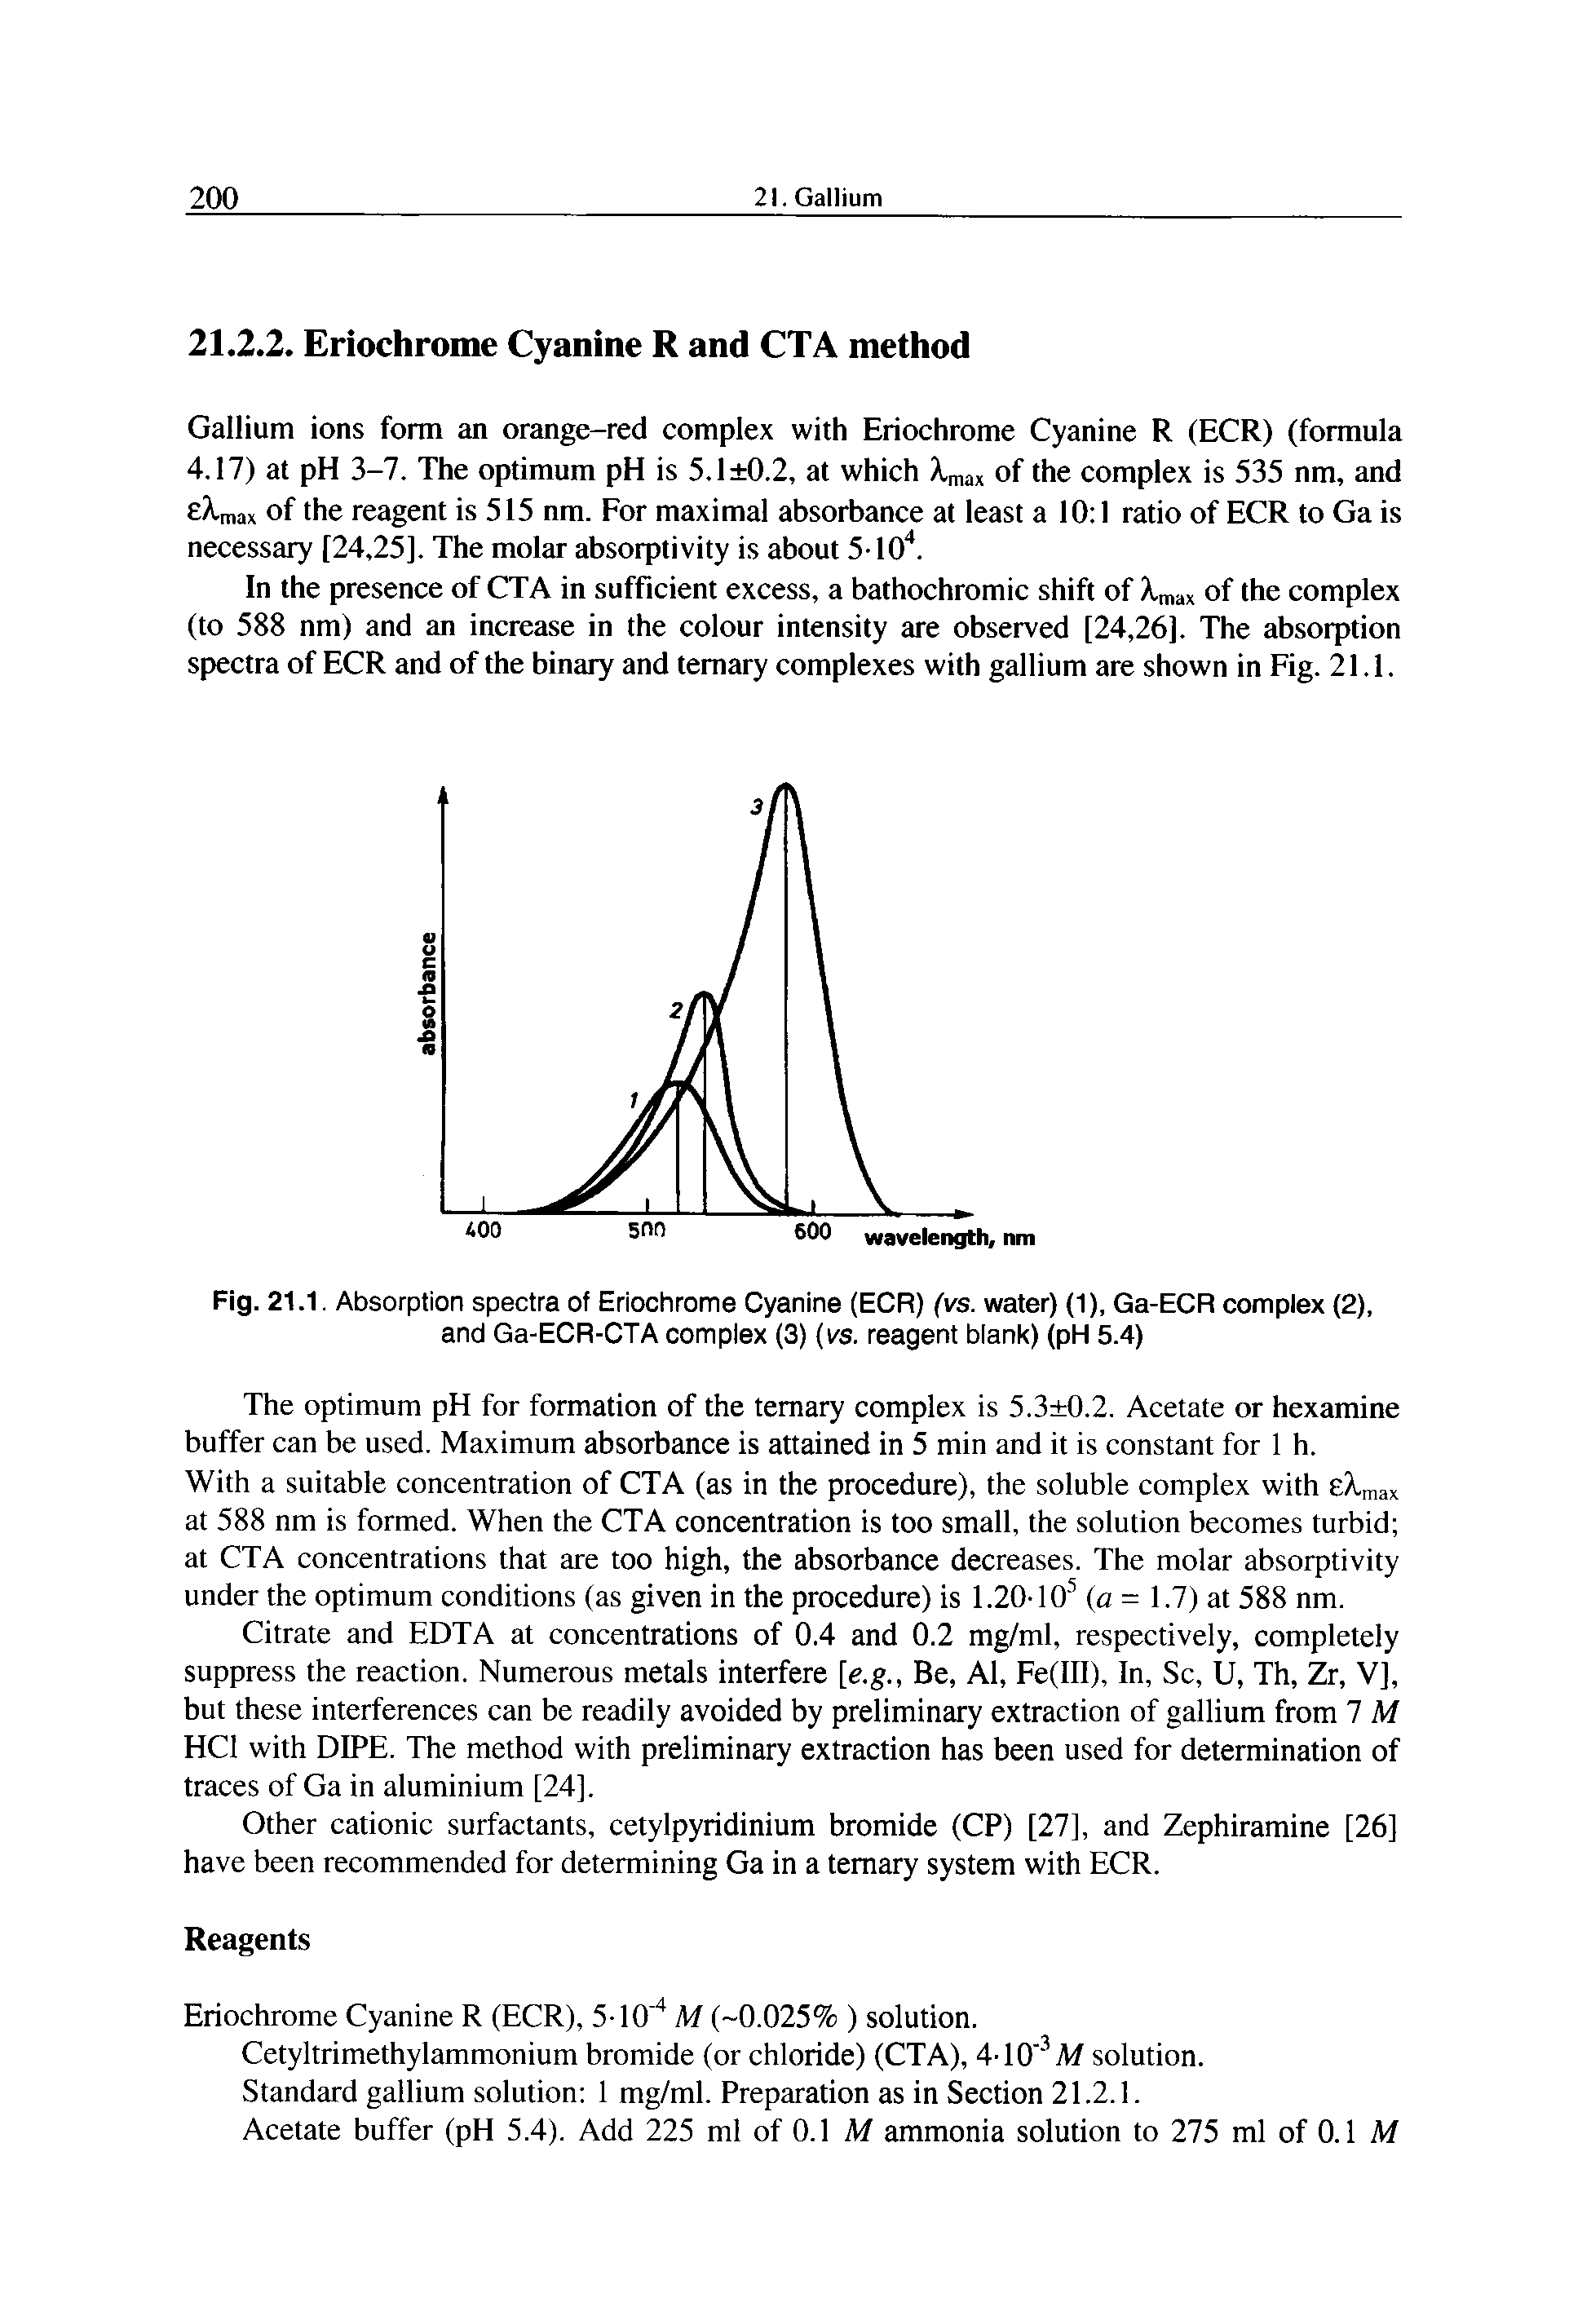 Fig. 21.1. Absorption spectra of Eriochrome Cyanine (ECR) (vs. water) (1), Ga-ECR complex (2), and Ga-ECR-CTA complex (3) (vs. reagent blank) (pH 5.4)...